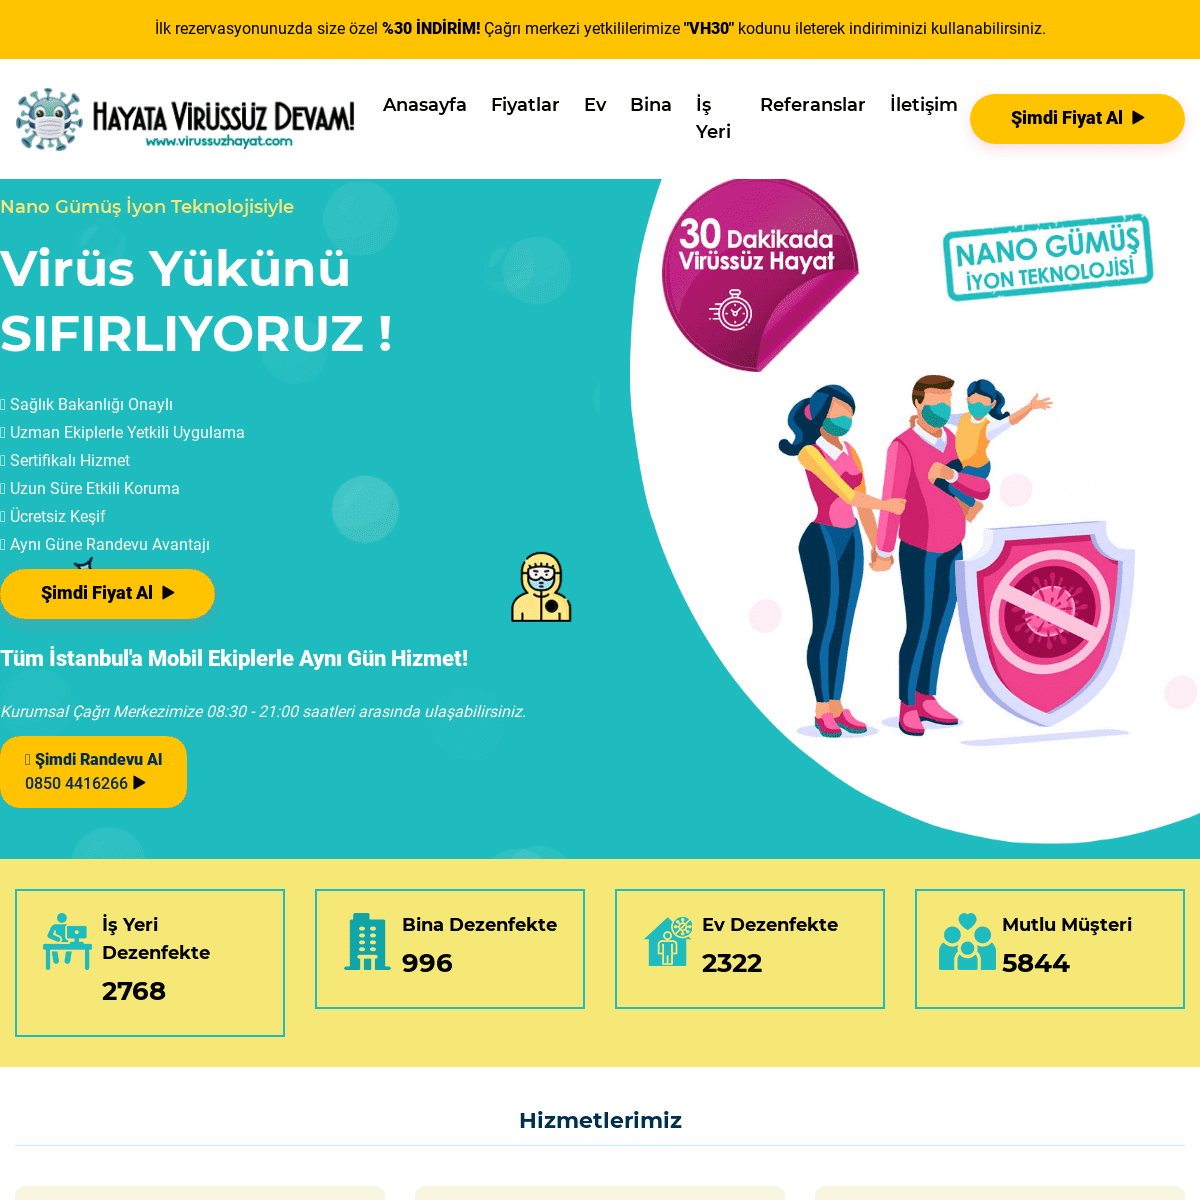 A complete backup of https://virussuzhayat.com